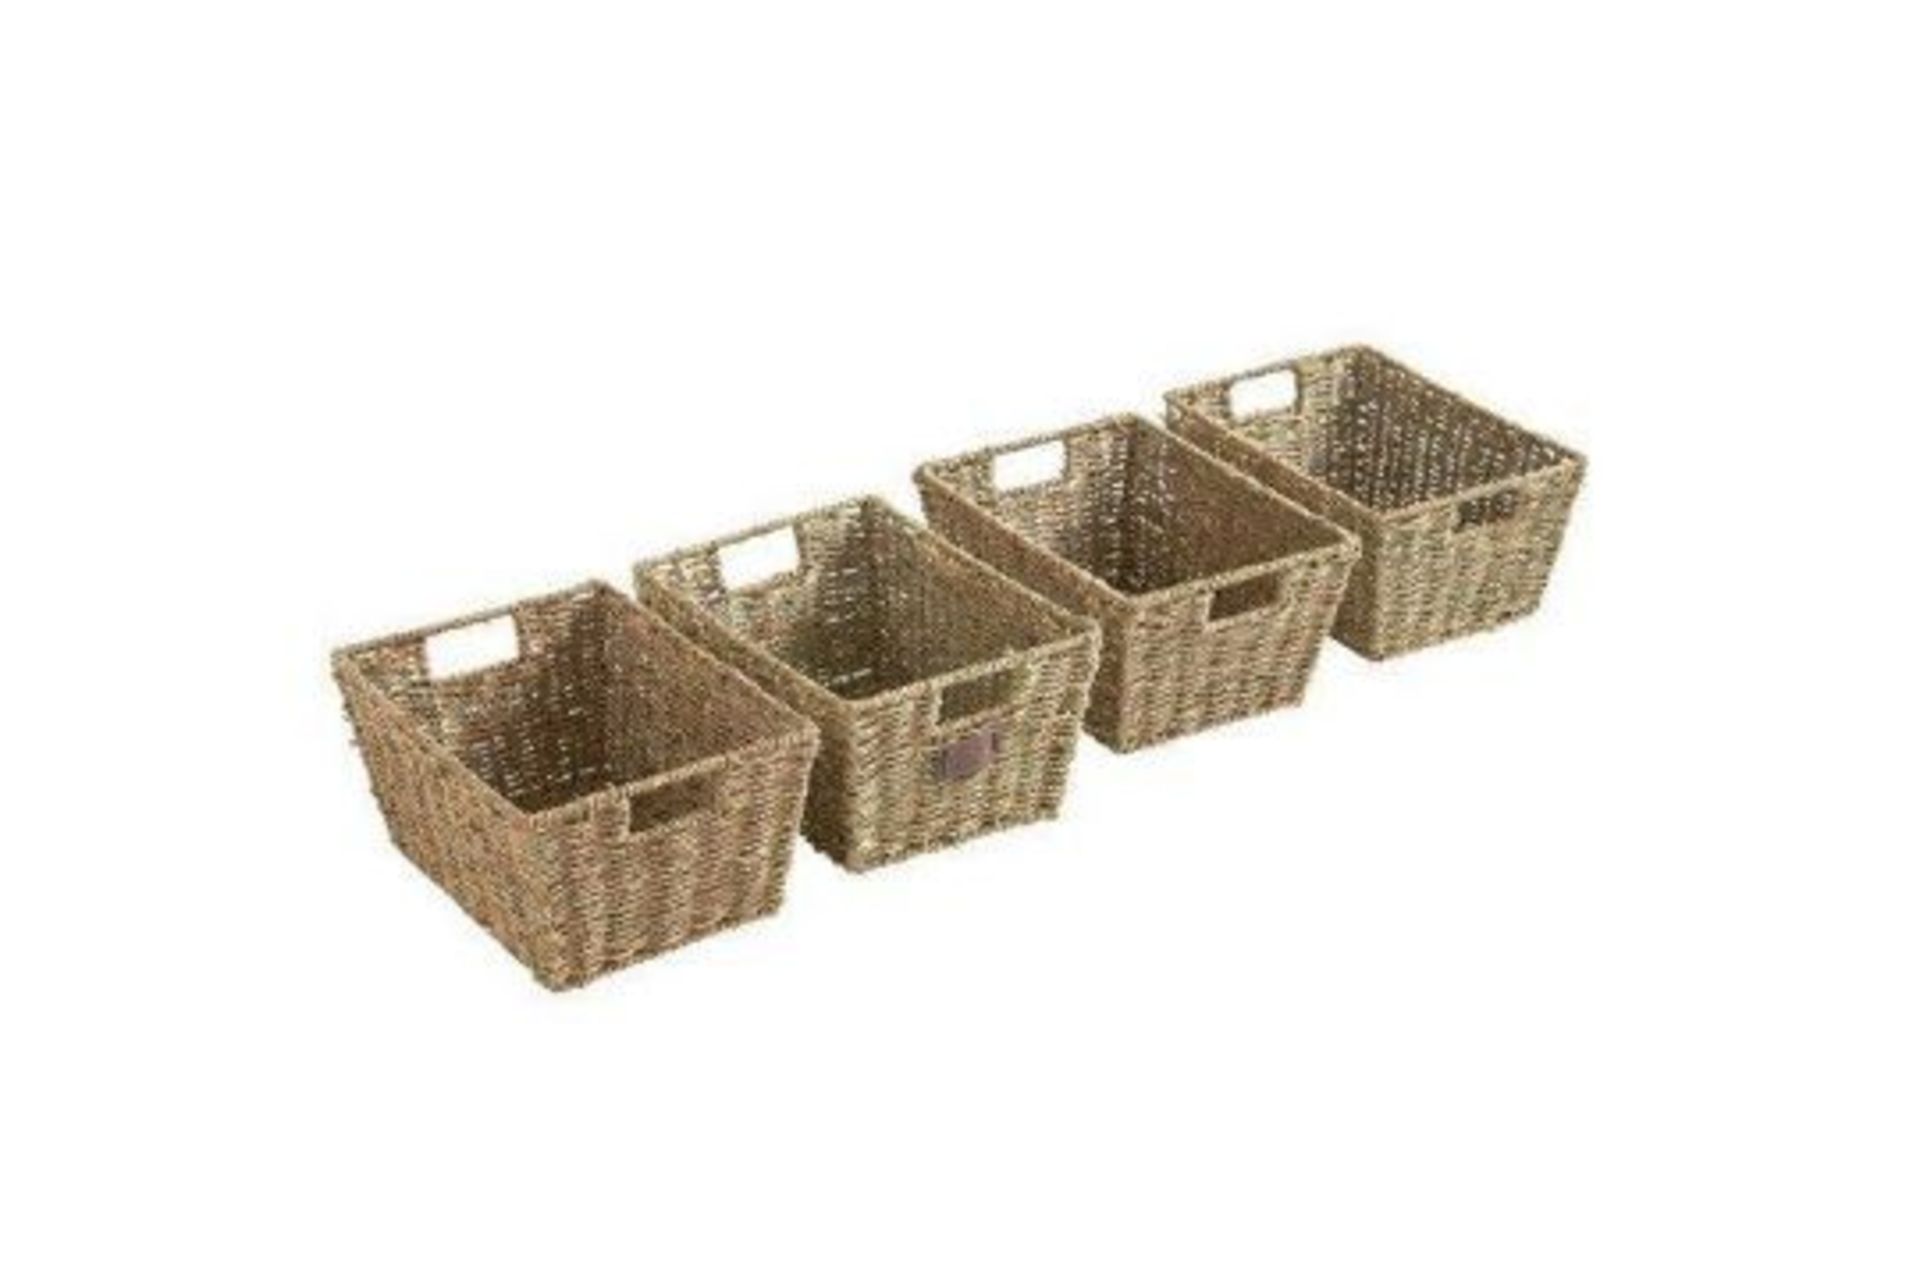 Seagrass Basket Wayfair Basics - PW. Wayfair Basics Store belongings in an orderly fashion with